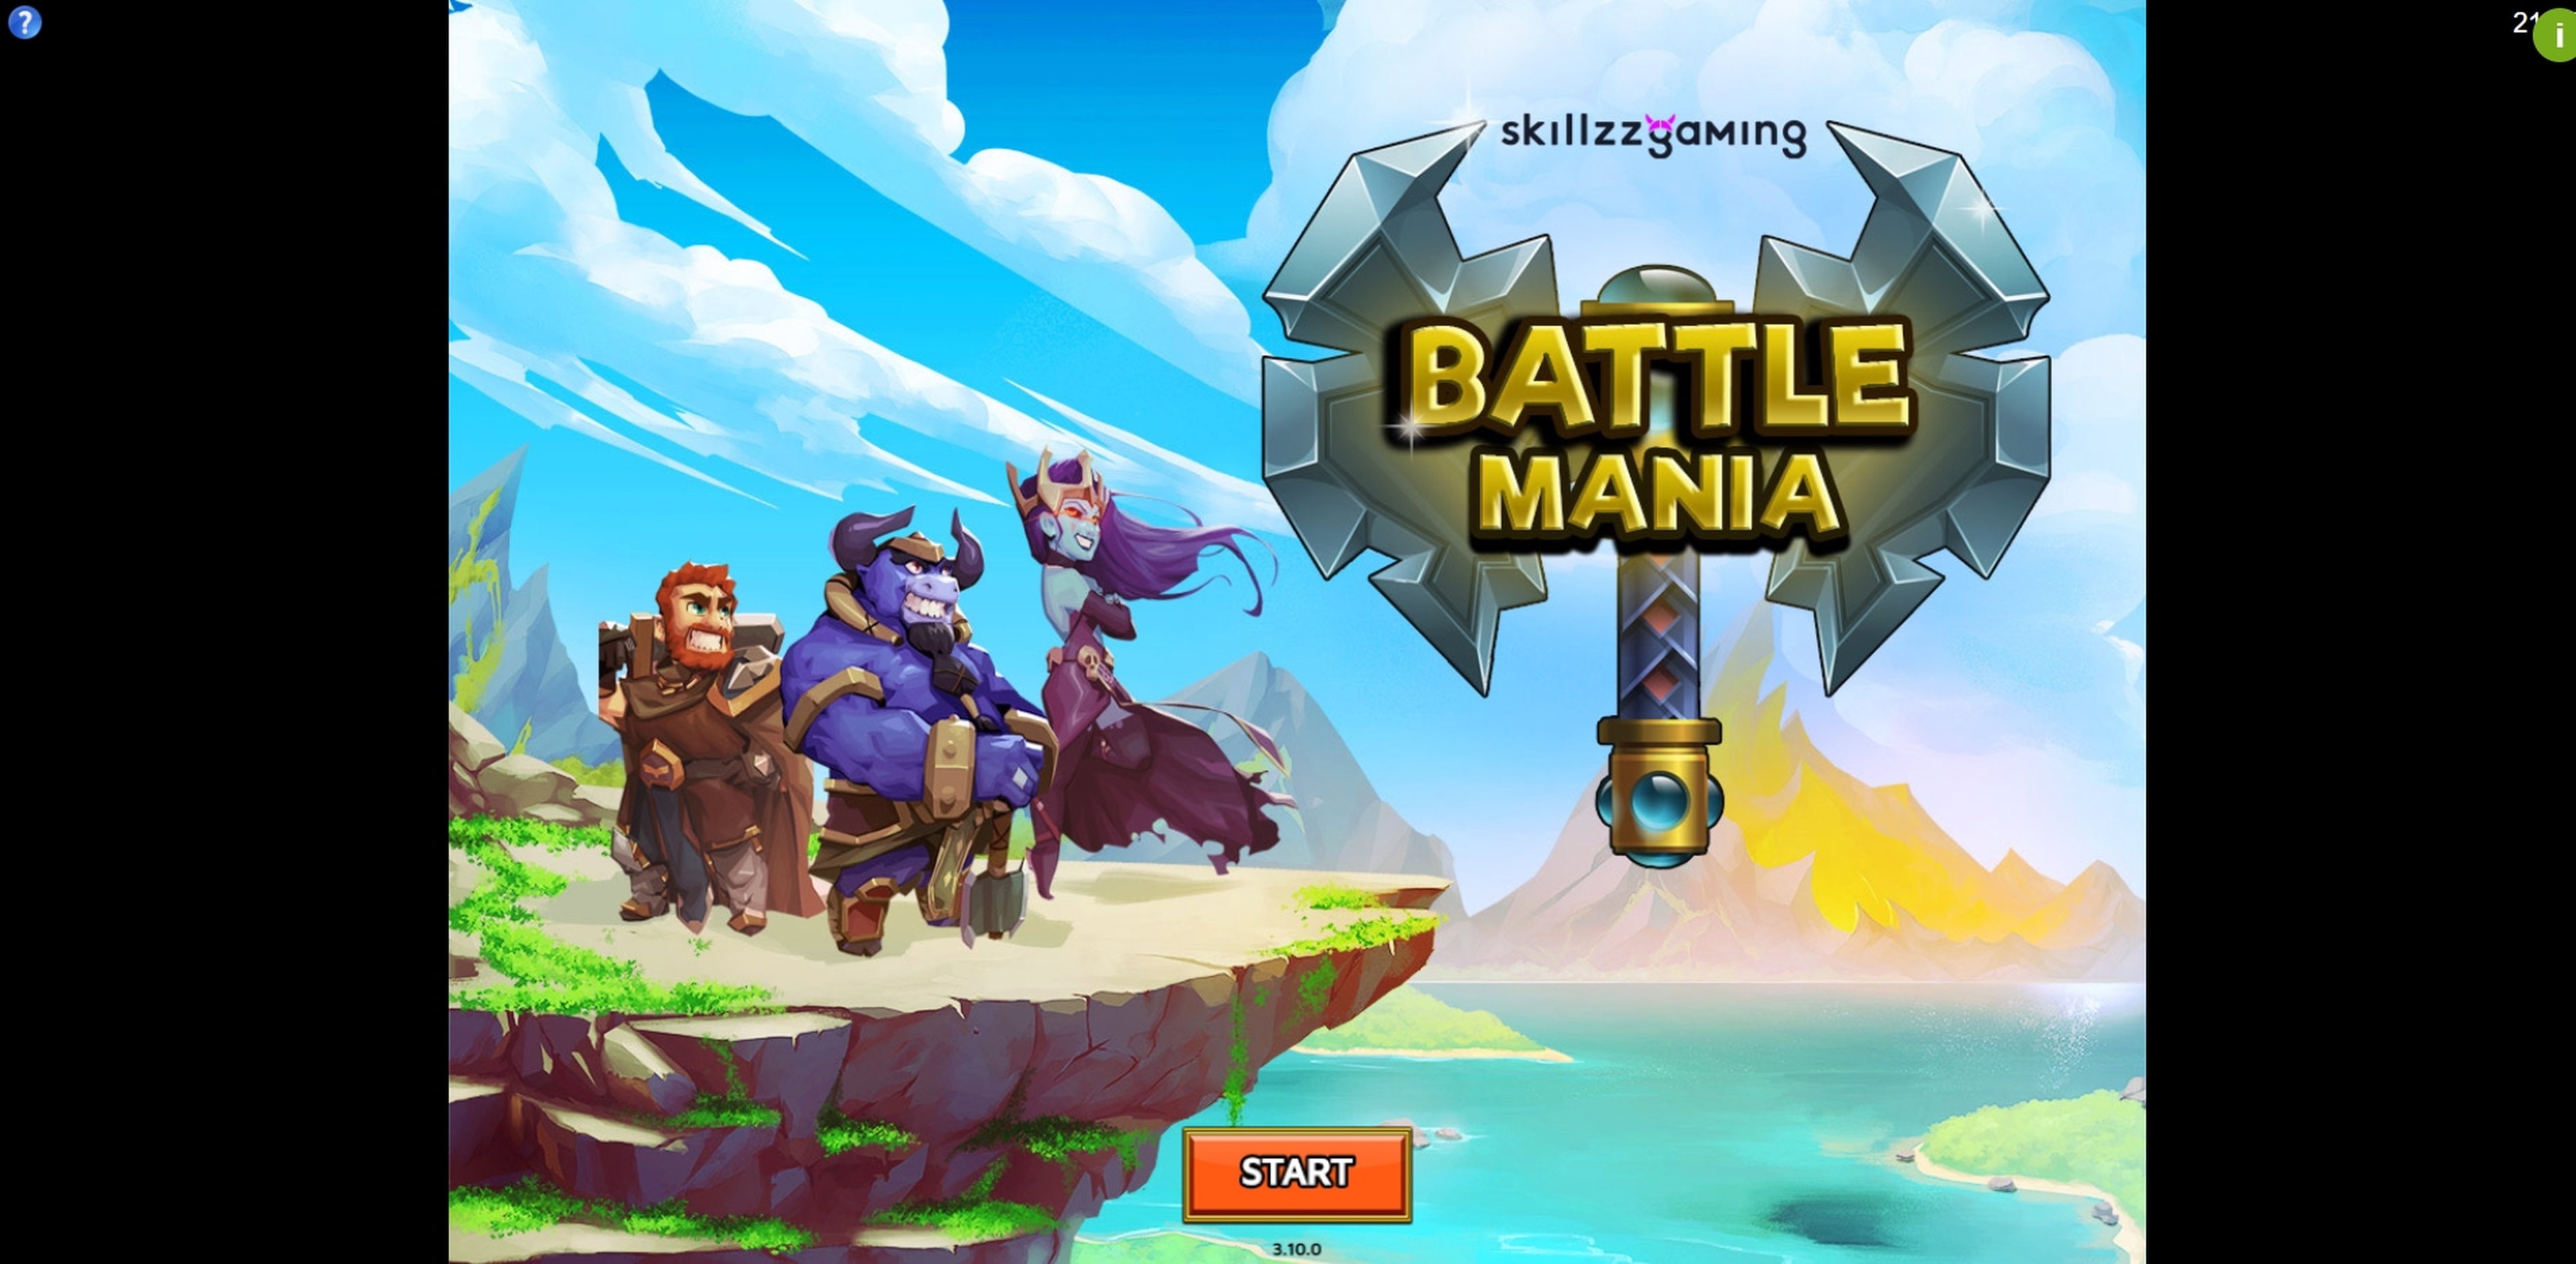 Play Battle Mania Free Casino Slot Game by Skillzzgaming